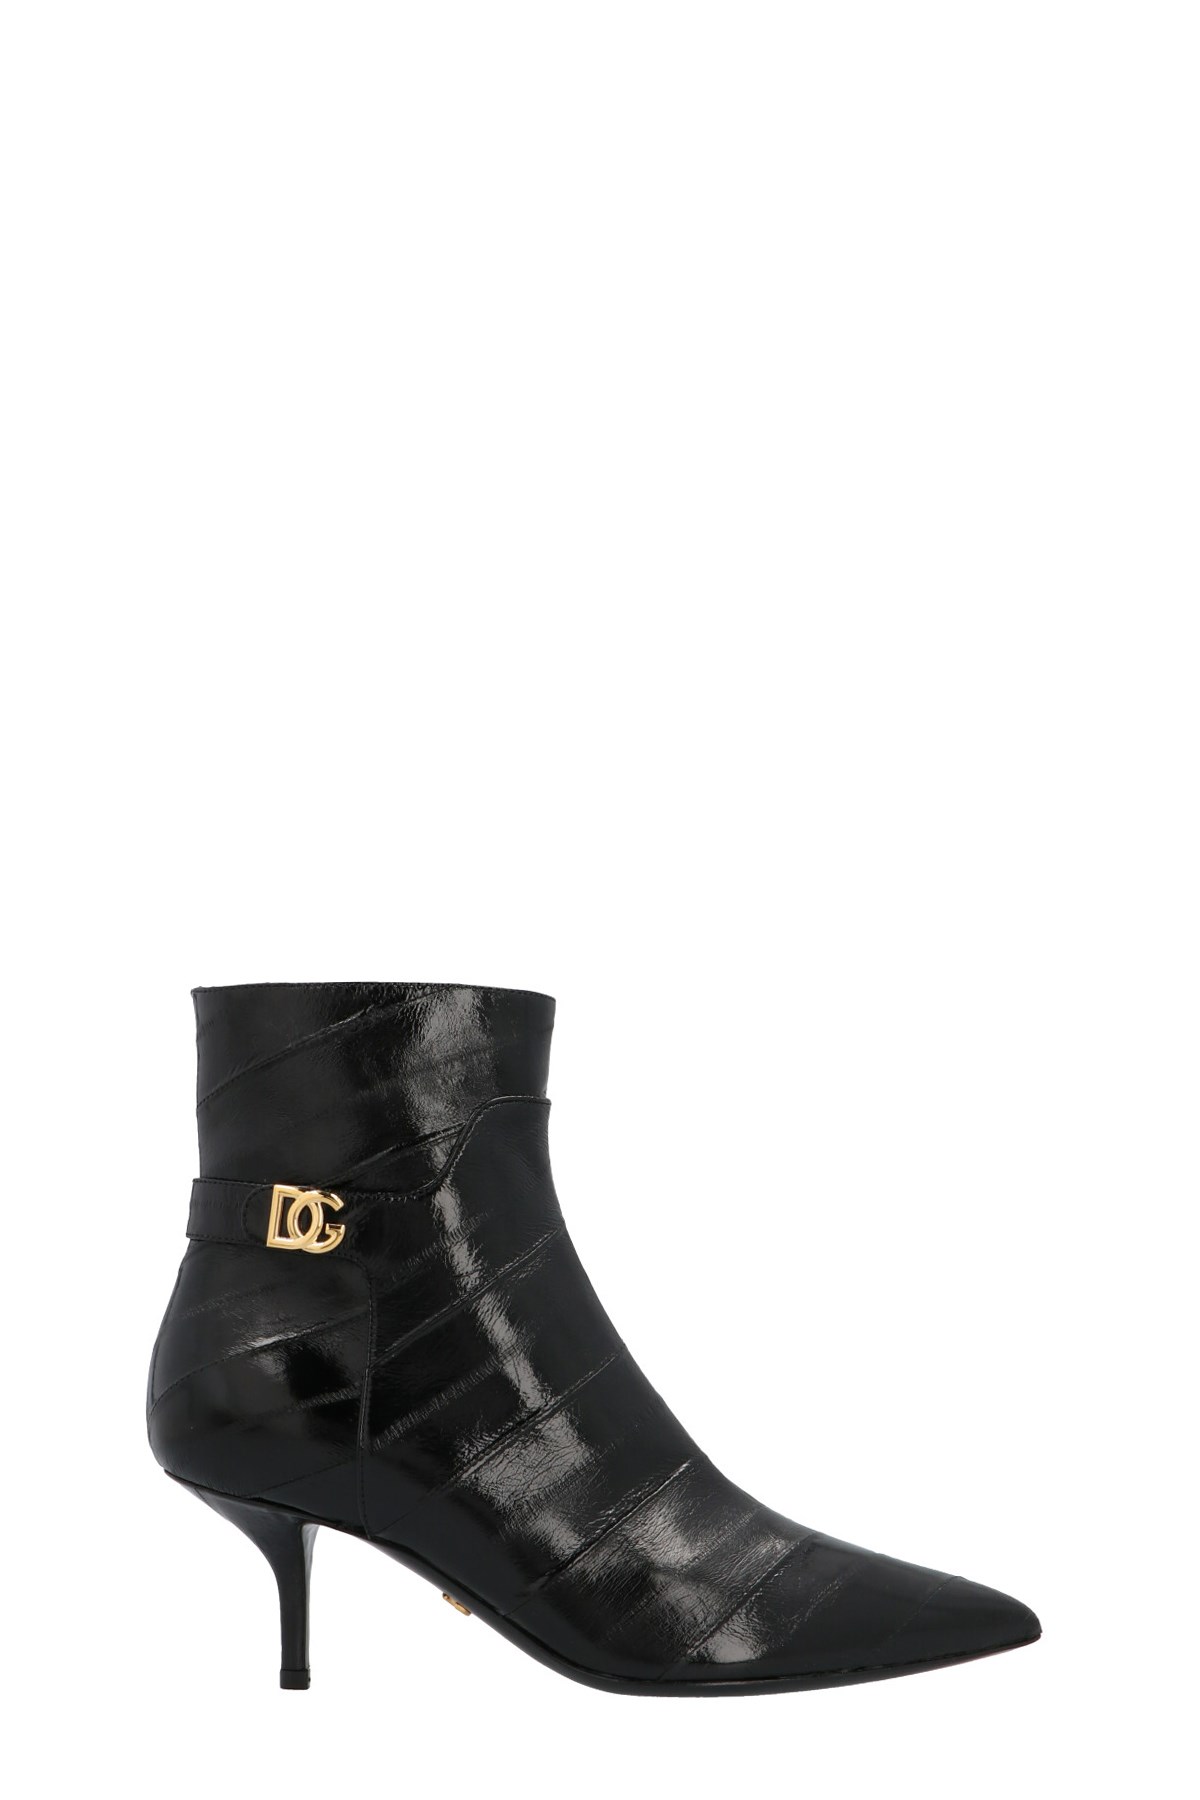 DOLCE & GABBANA Logo Ankle Boots